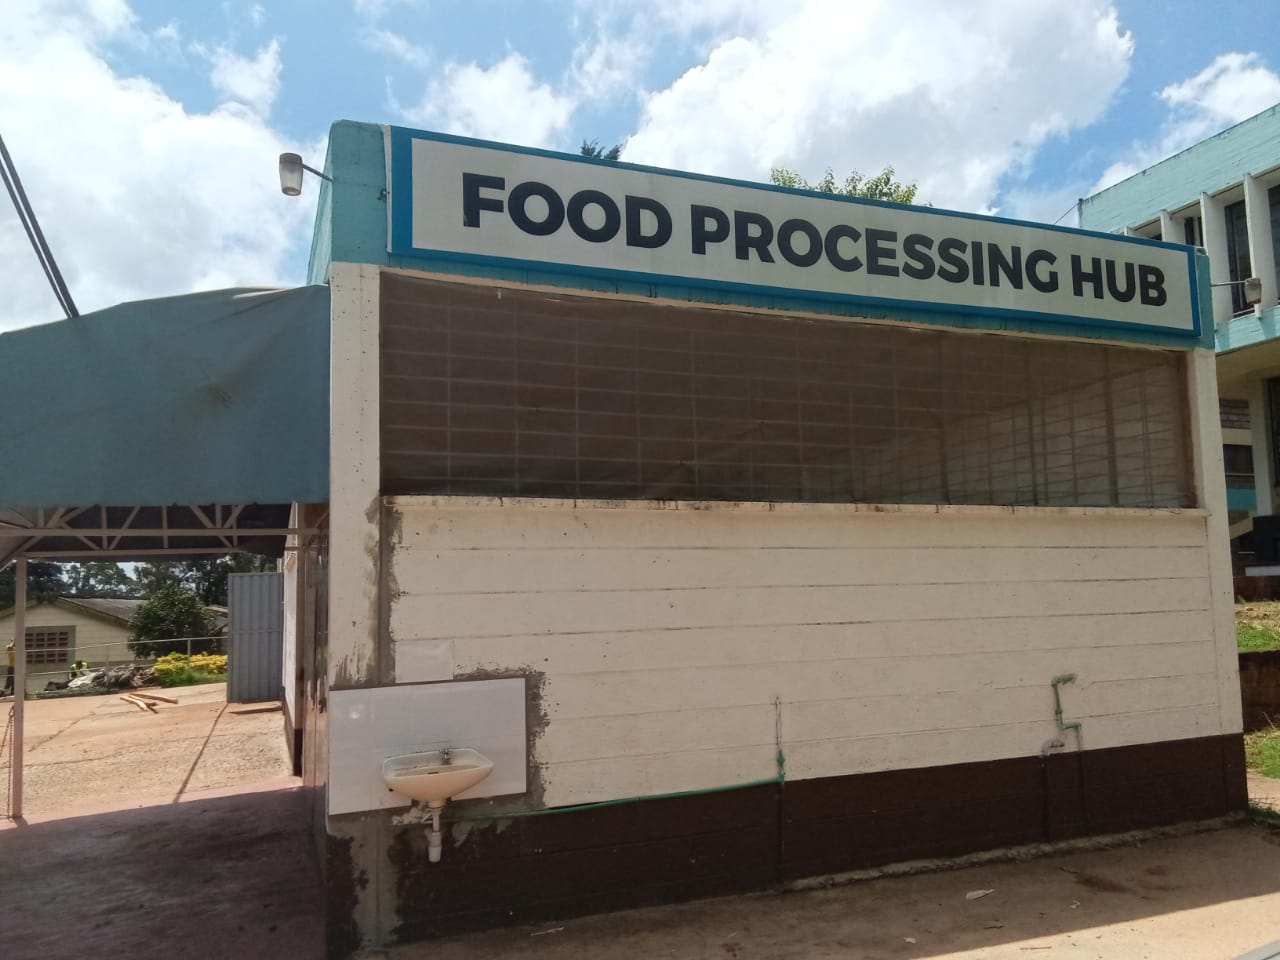 Food Processing hub